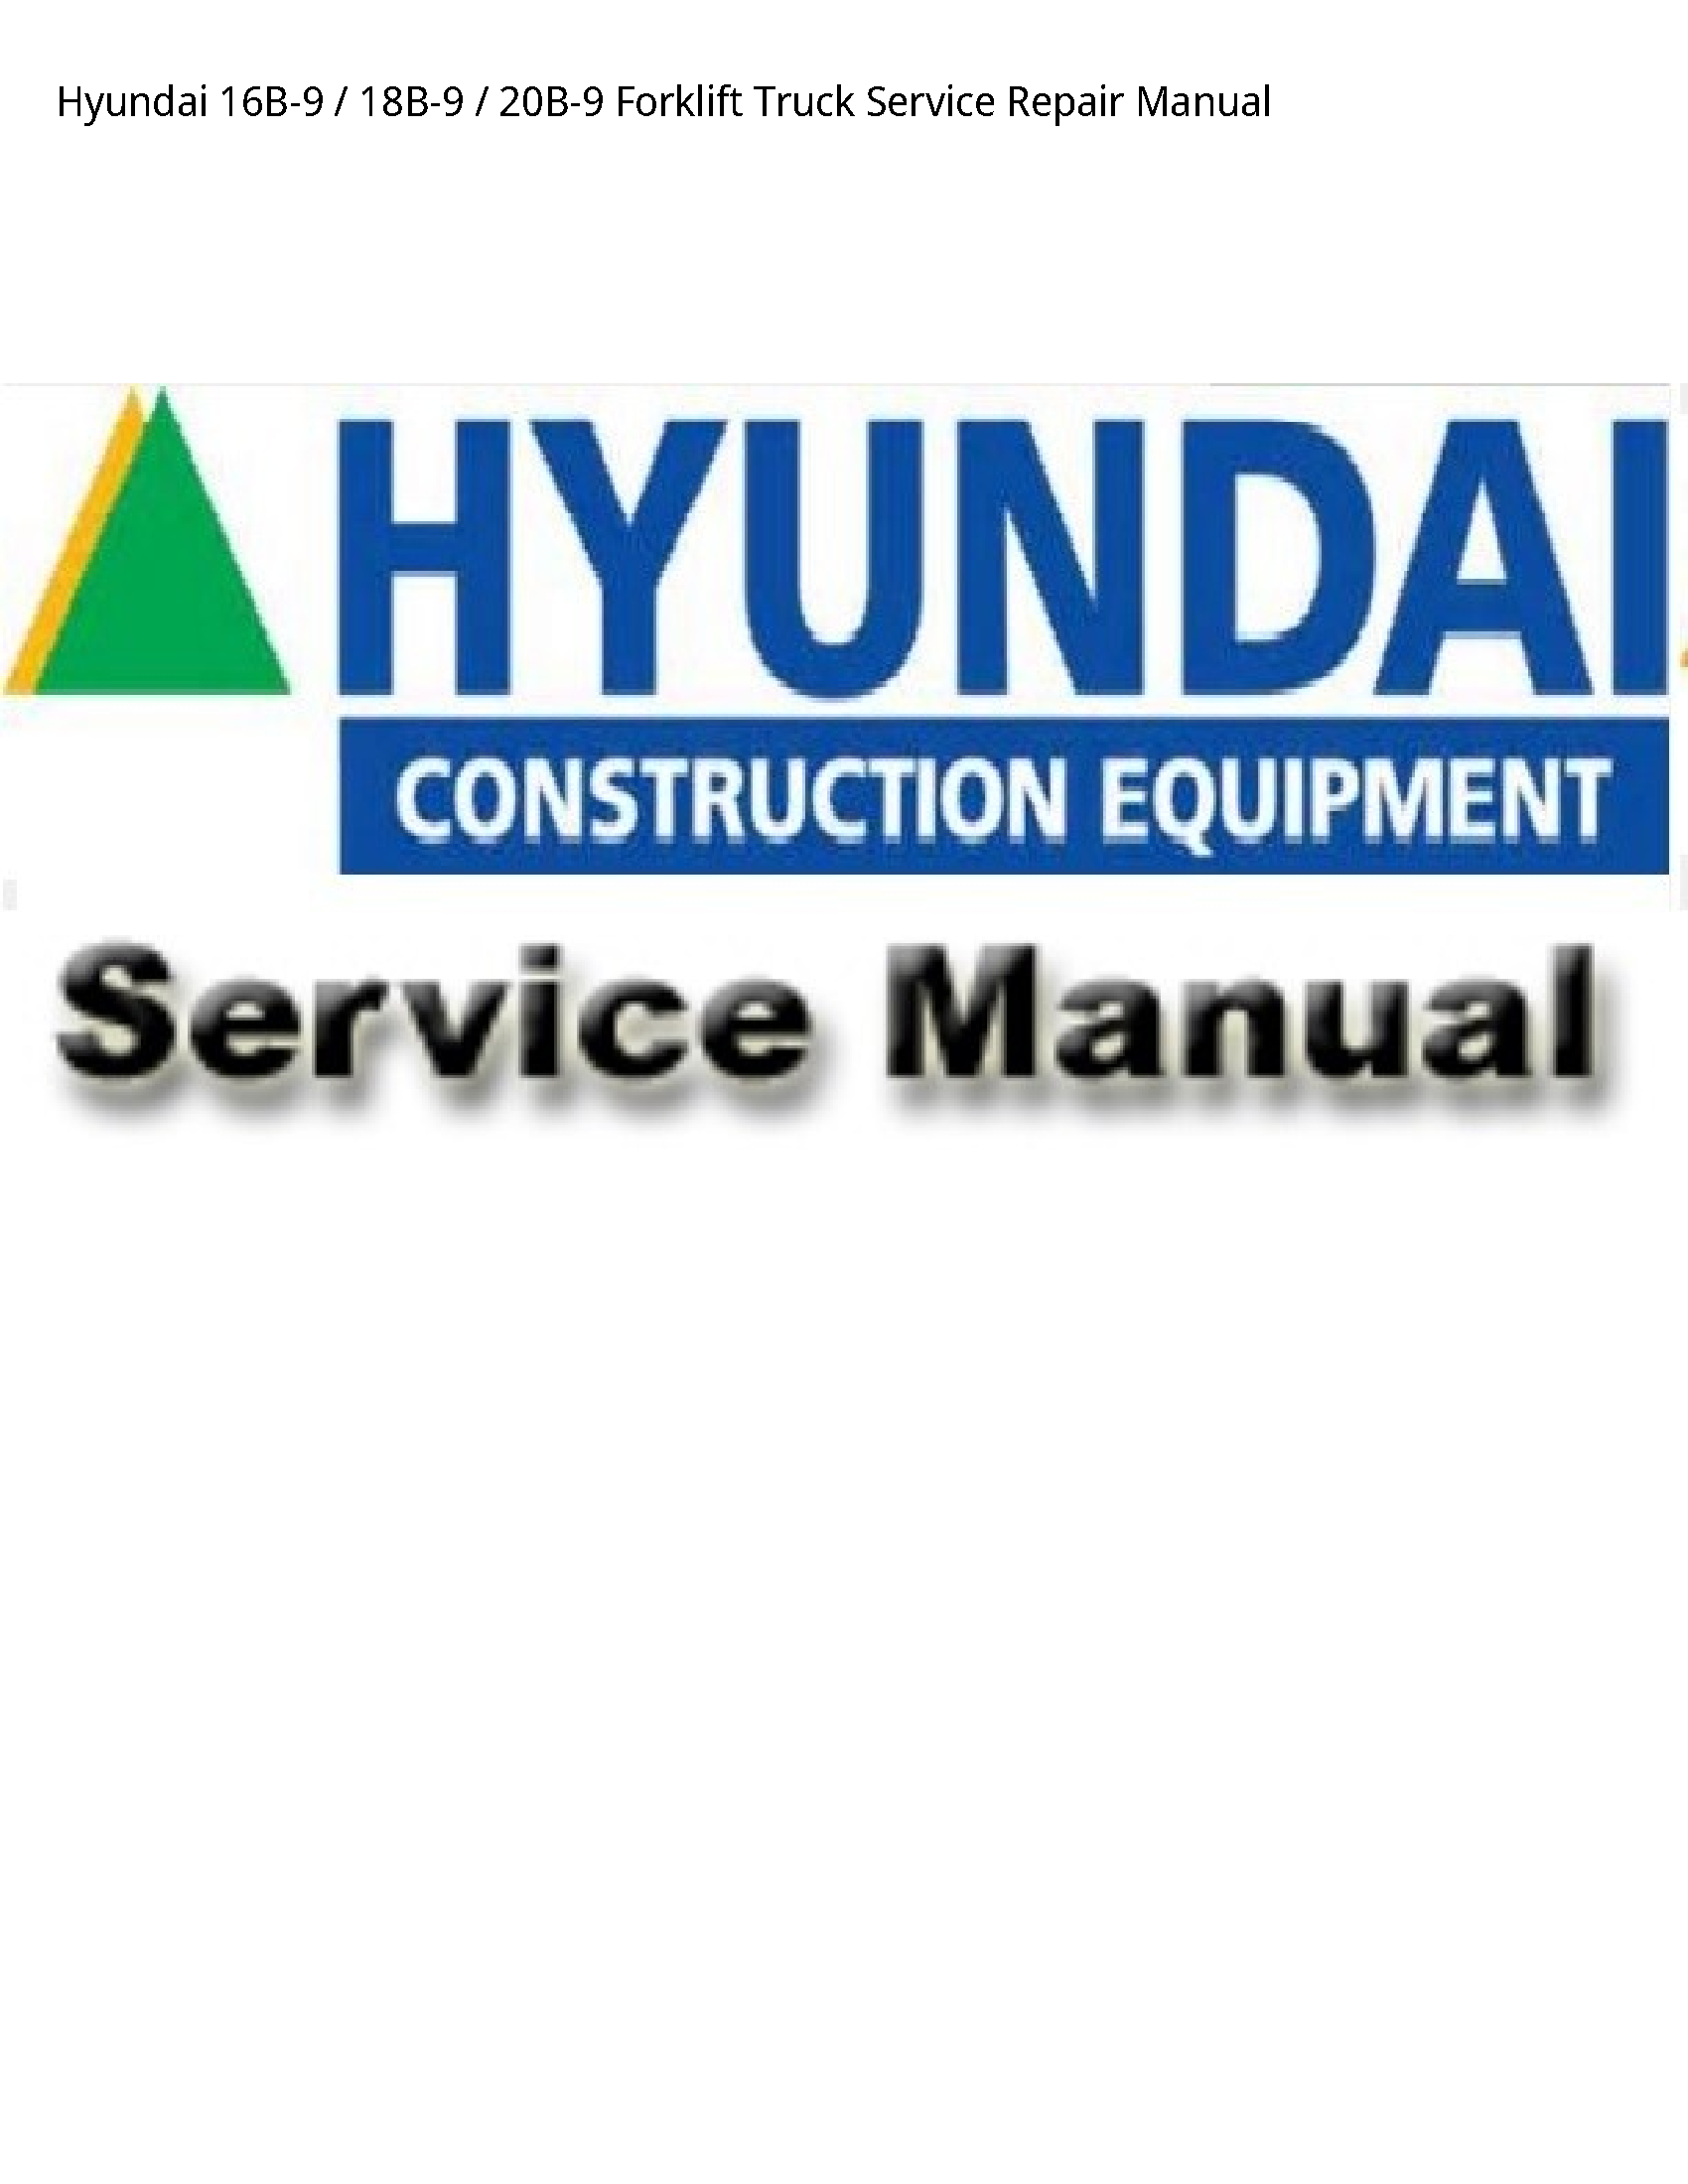 Hyundai 16B-9 Forklift Truck manual